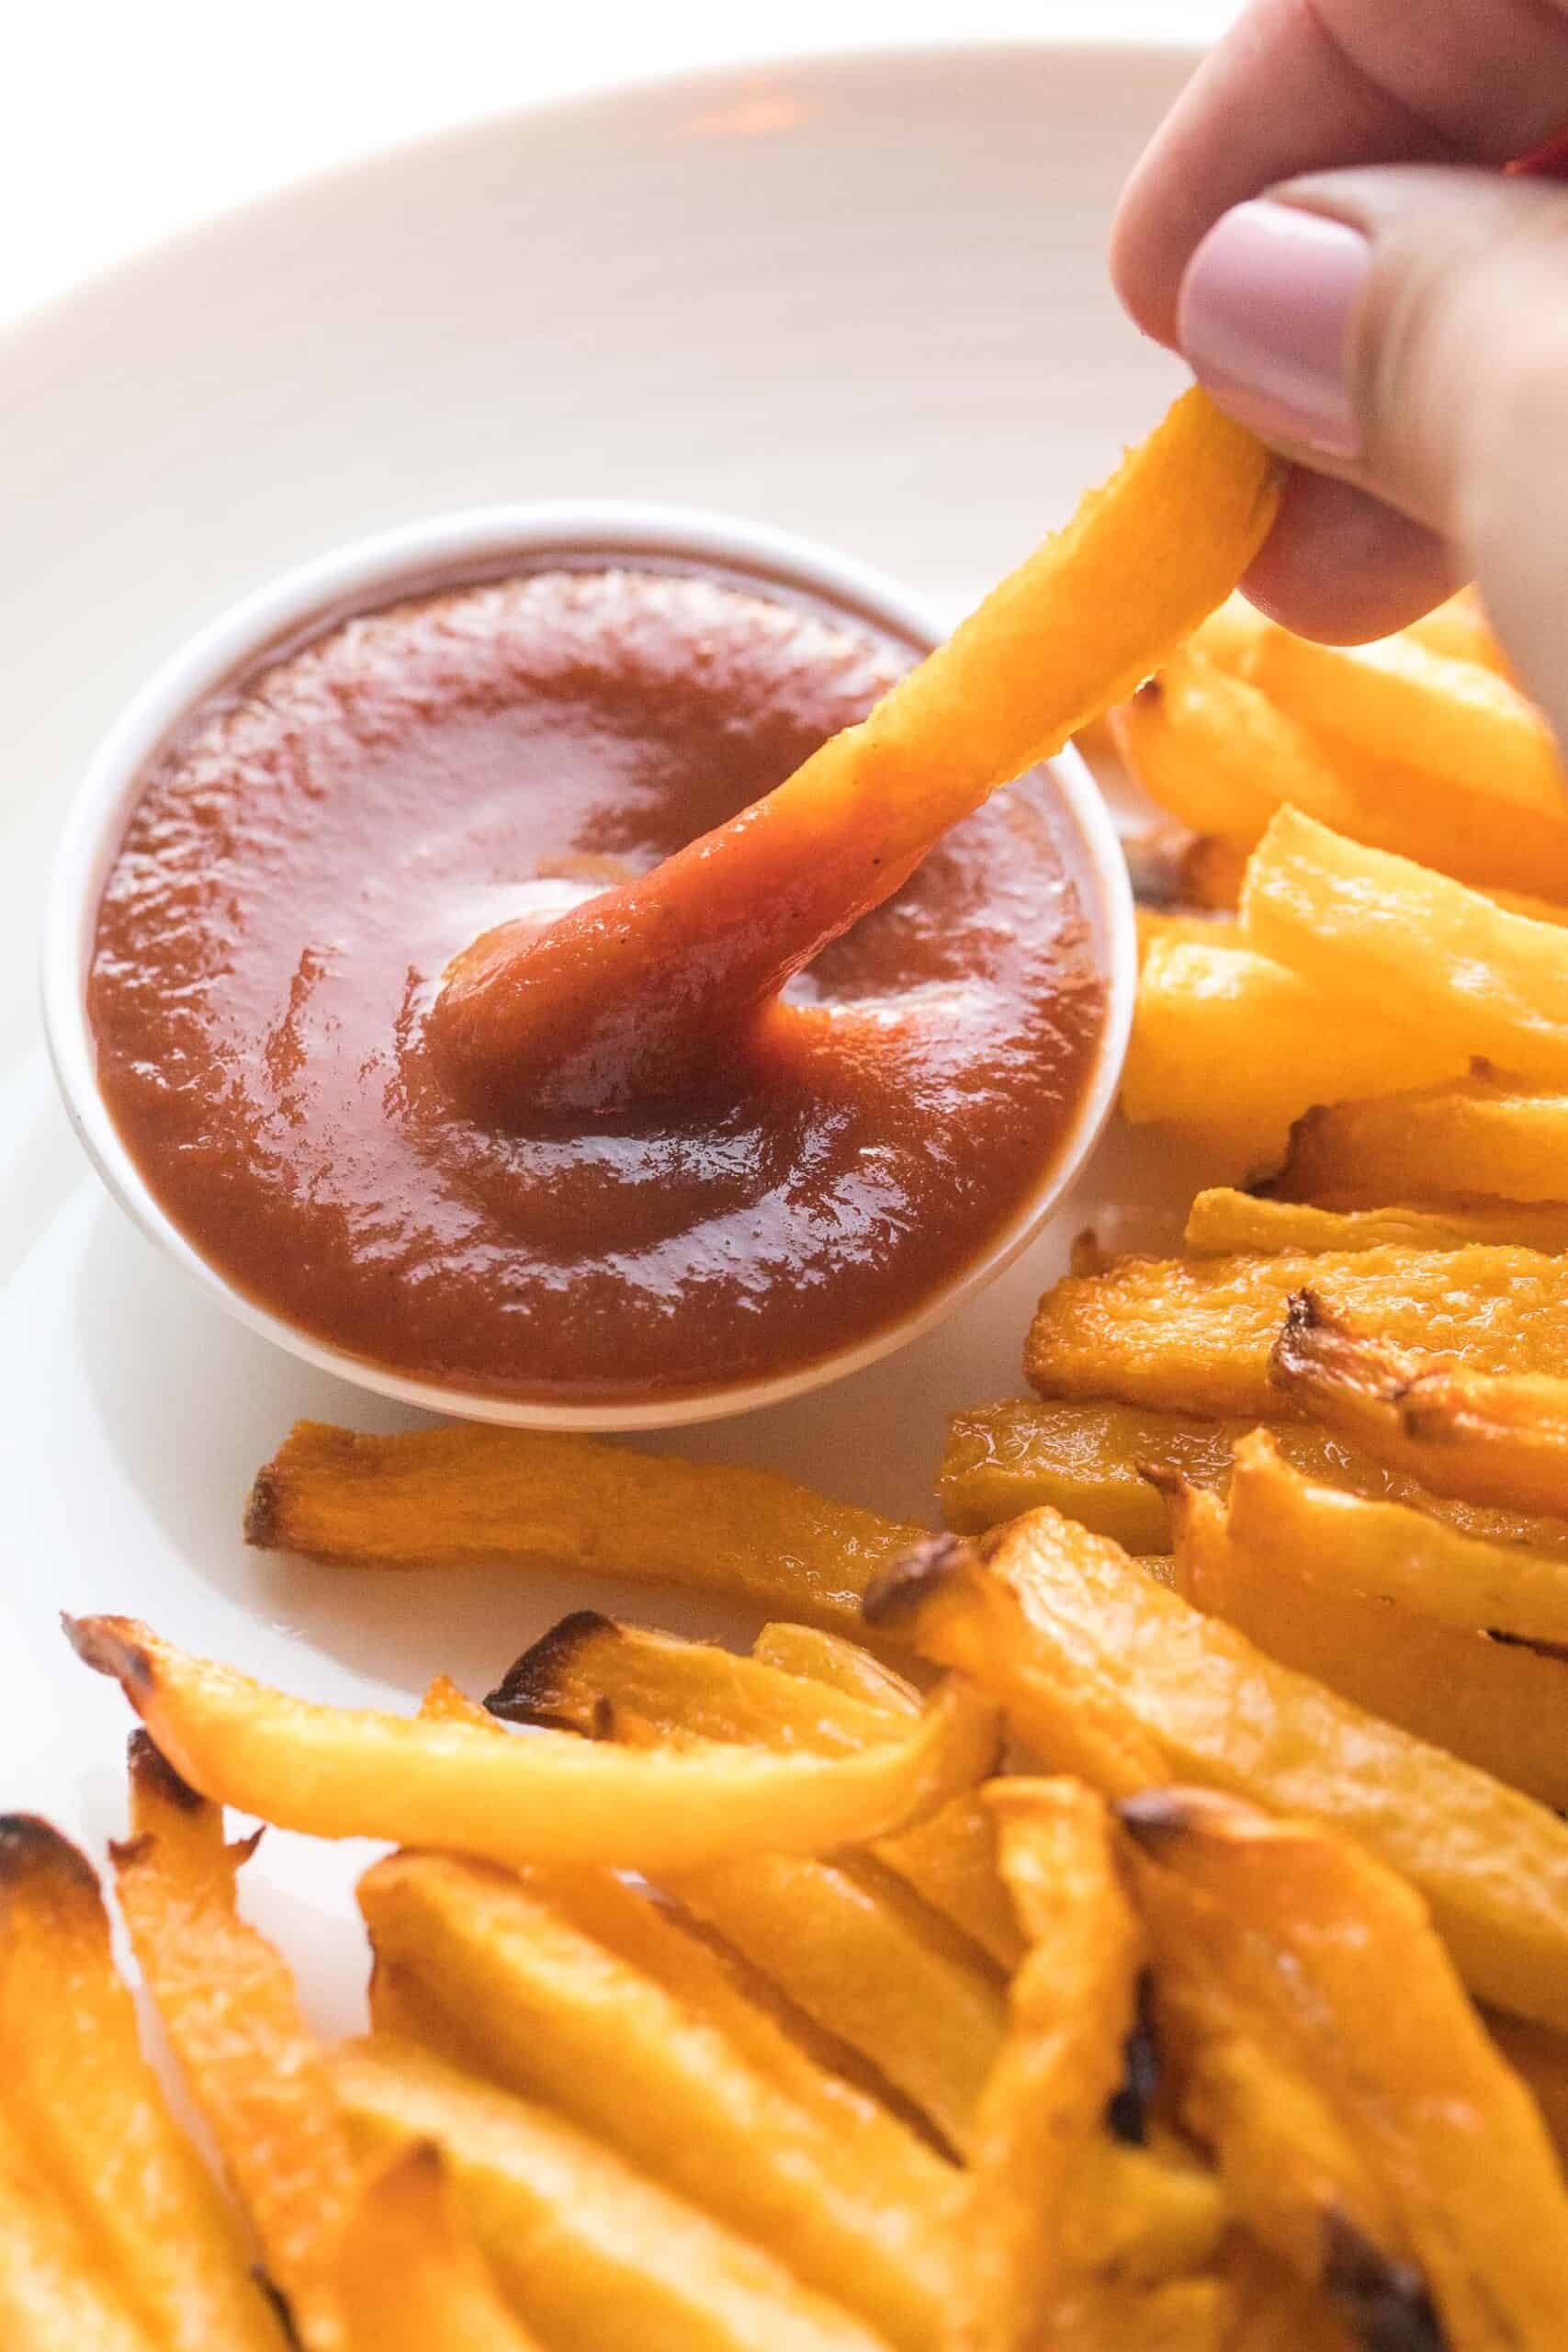 keto fries dipped in ketchup